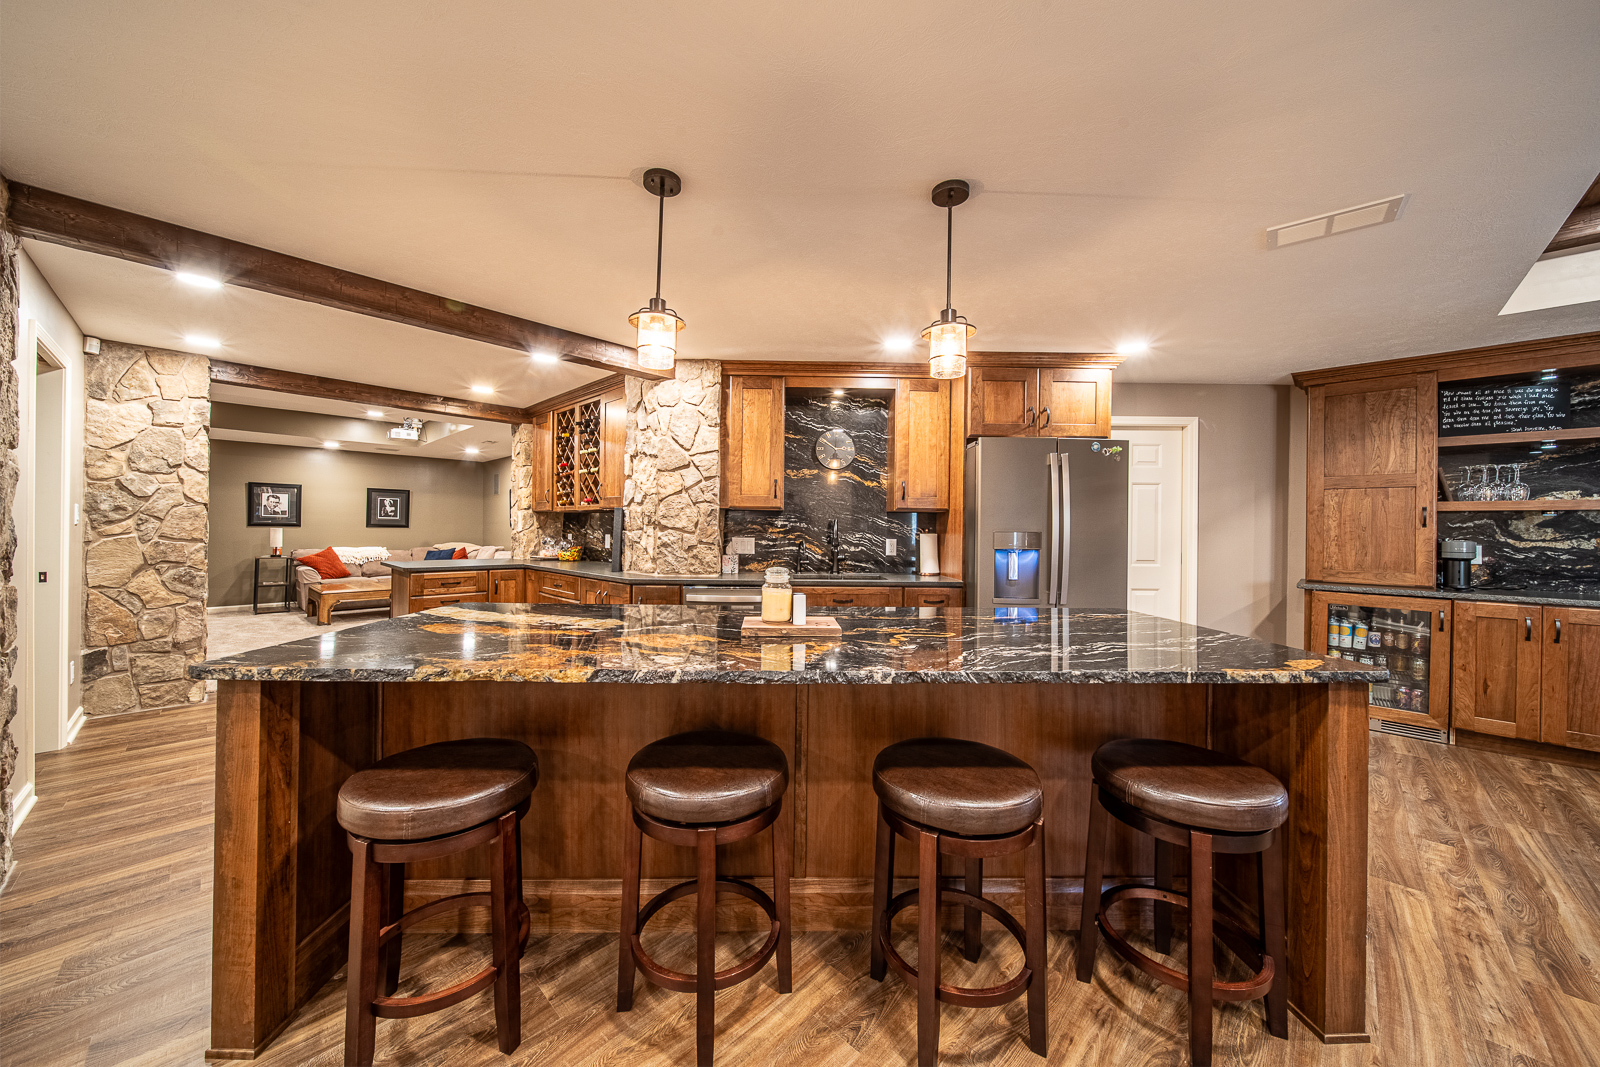 Basement kitchen on Ripple Creek Drive with stylish bar seating and modern design.